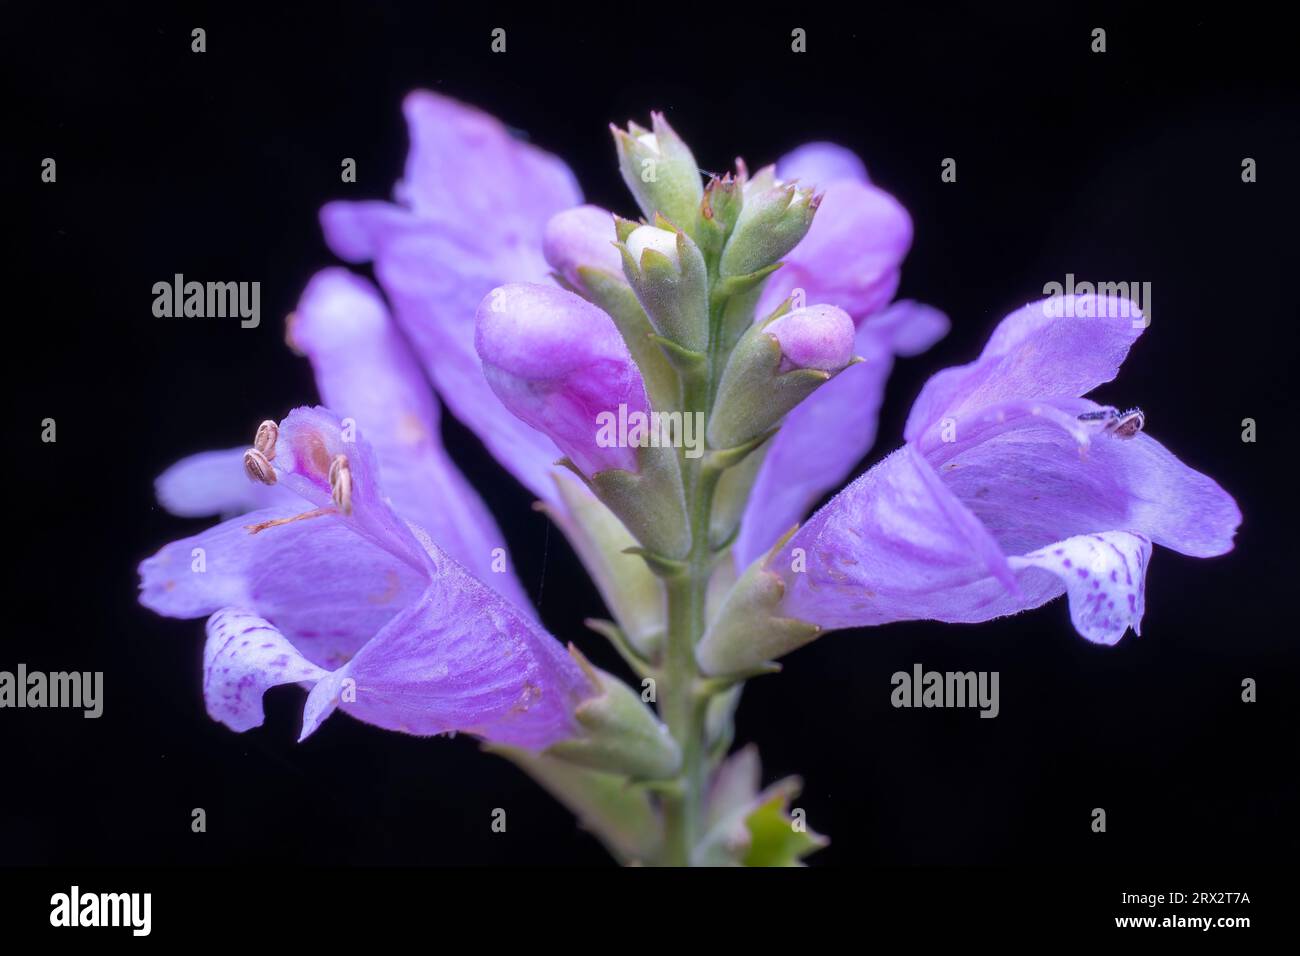 Salvia japonica purpurea flowers in the wild state Stock Photo